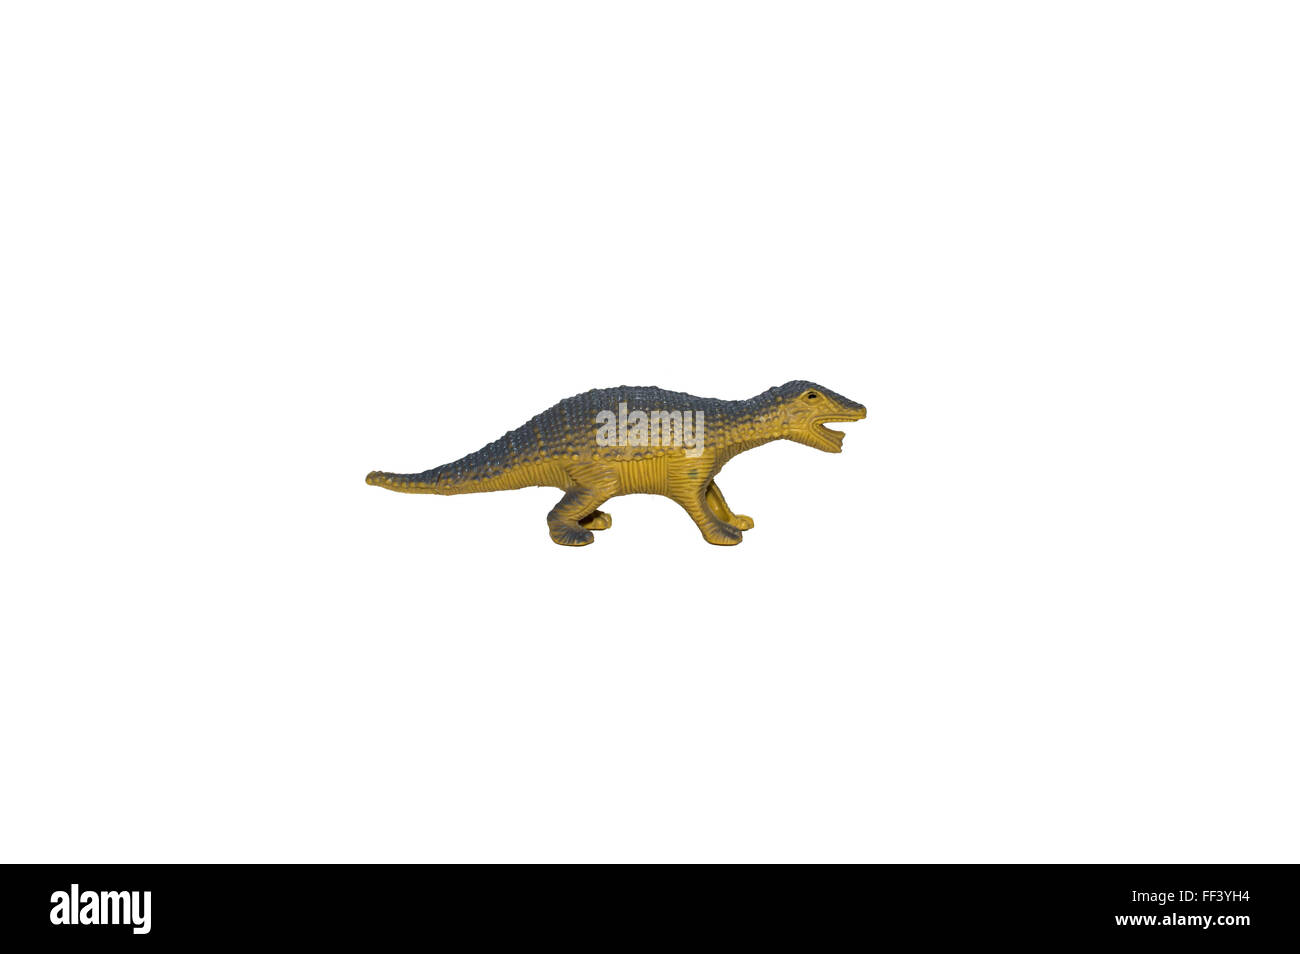 Dinosaur made of plastic Stock Photo